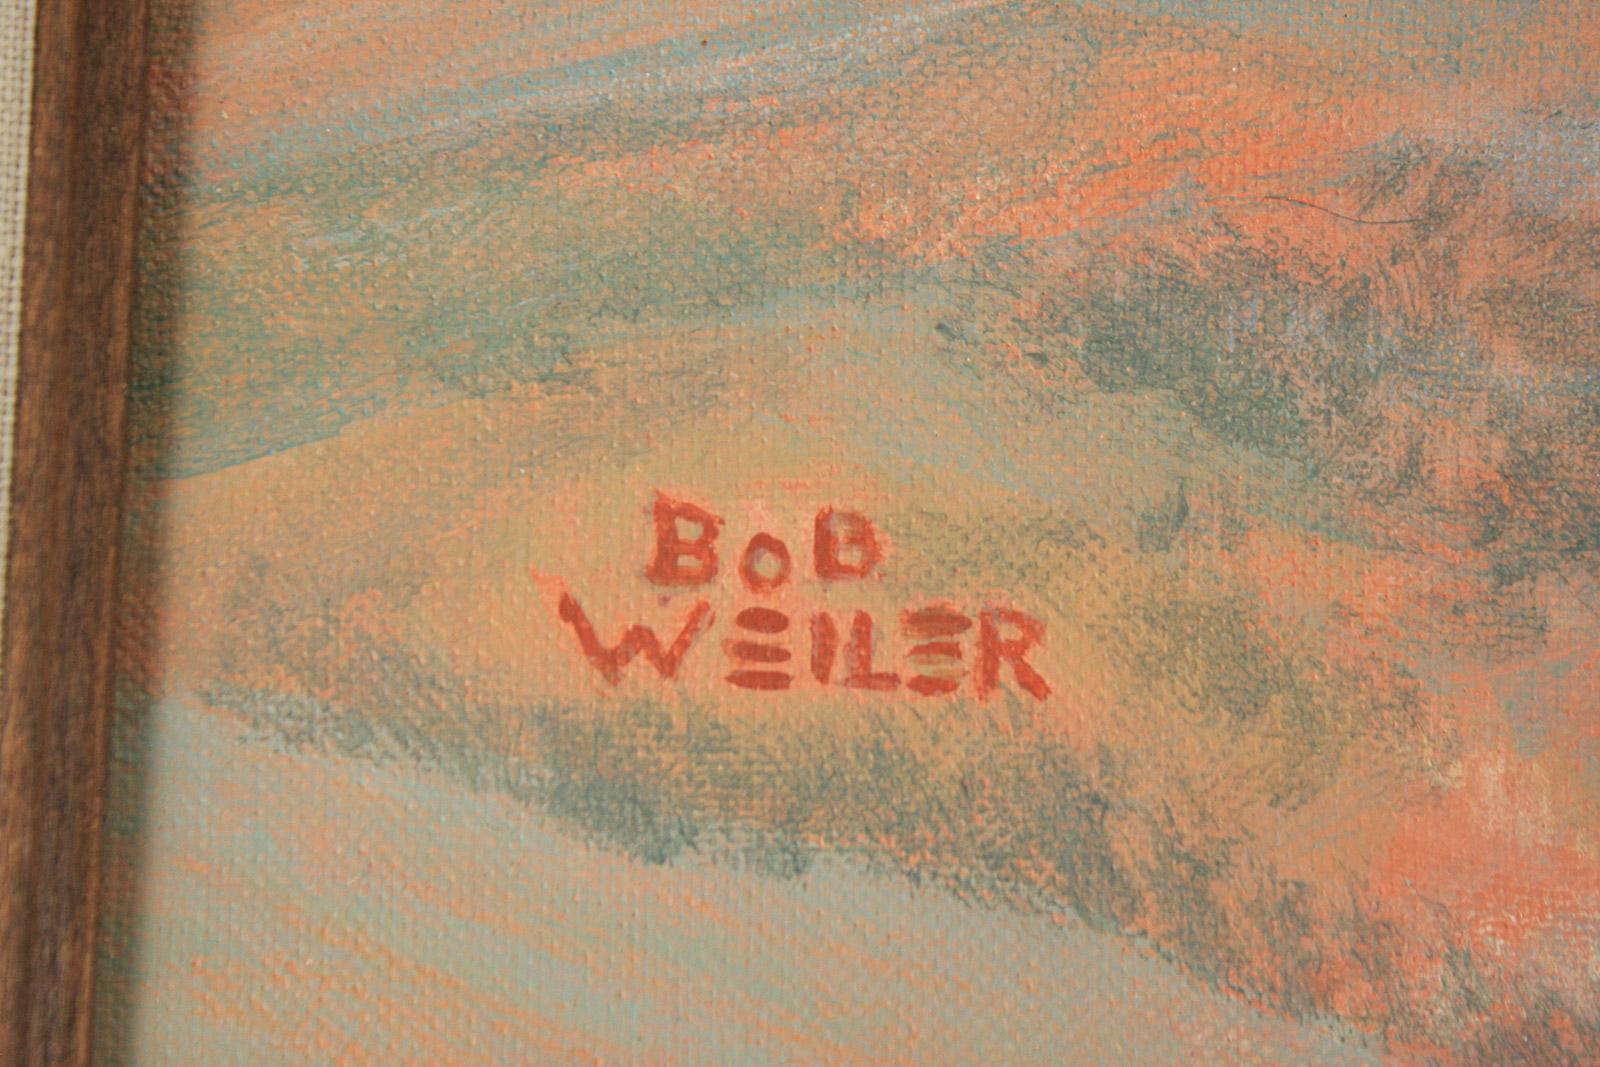 Bob Weiler "Republic P-47D" Painting